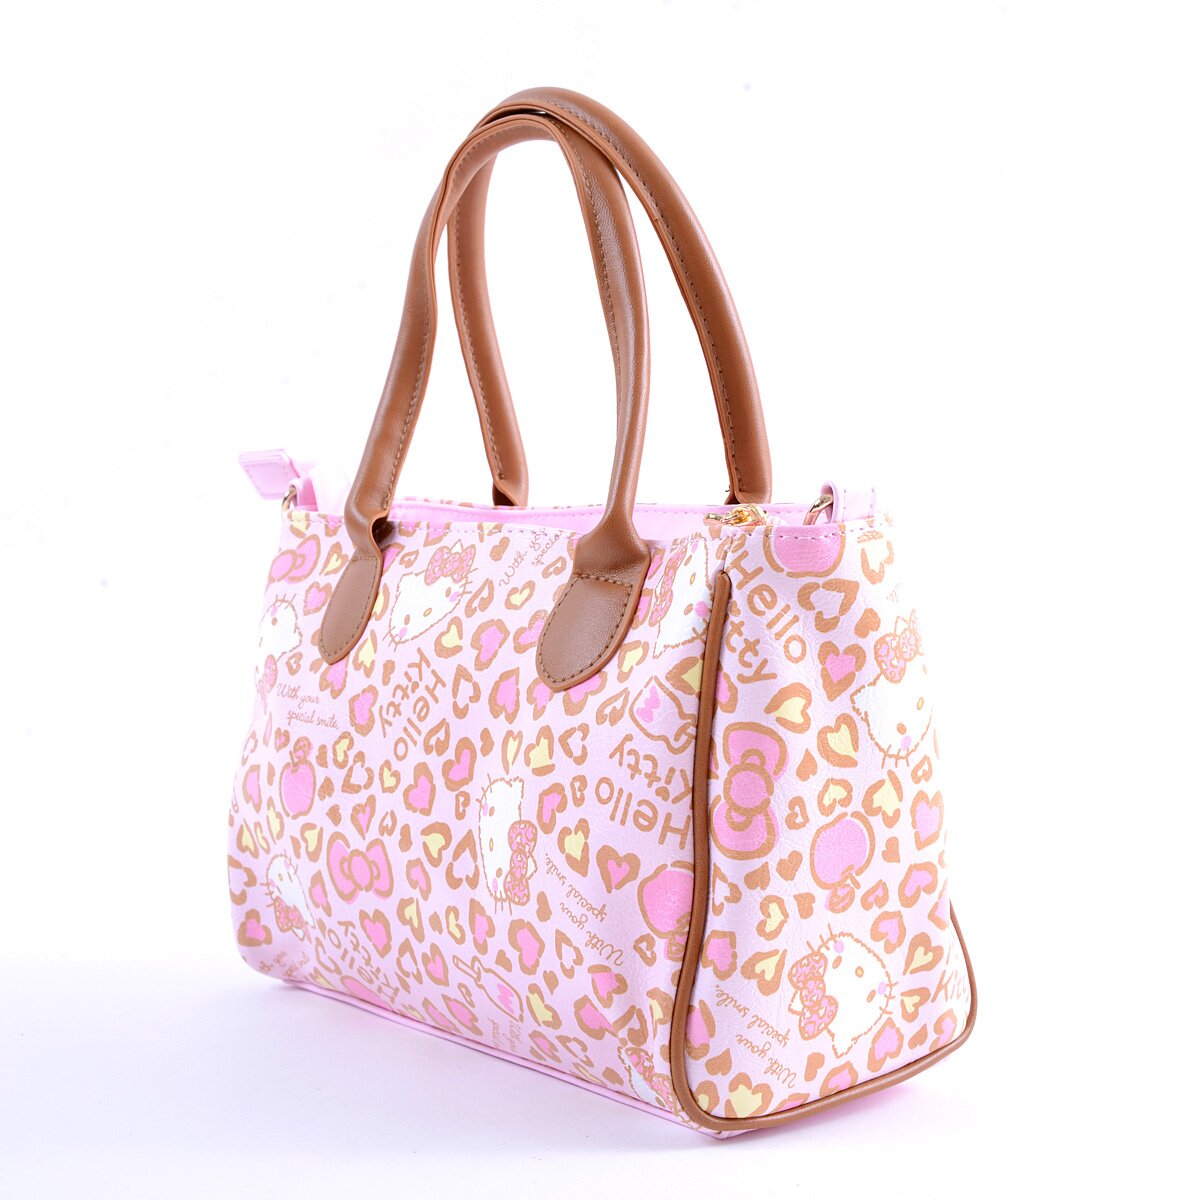 Hello kitty monogram Louis Vuitton pink handbag leather shoulder